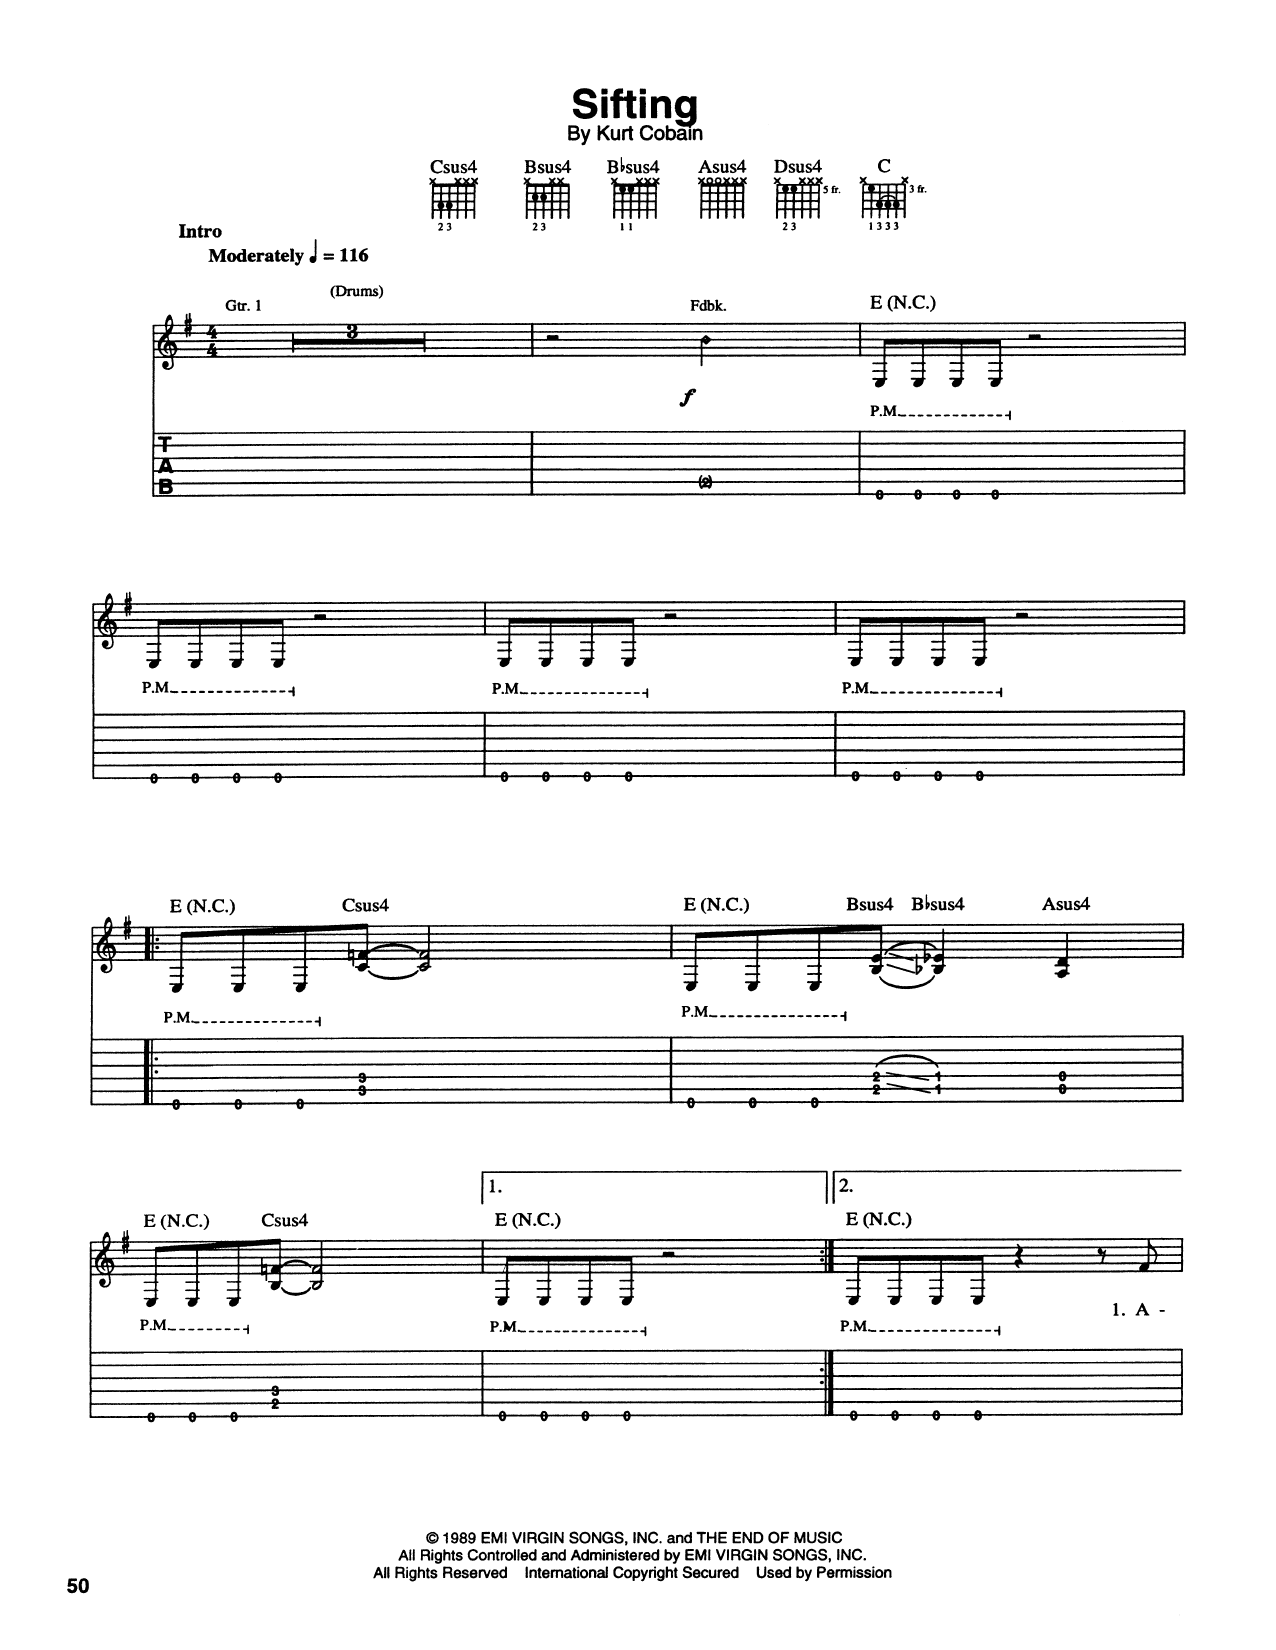 Nirvana Sifting Sheet Music Notes & Chords for Guitar Tab - Download or Print PDF